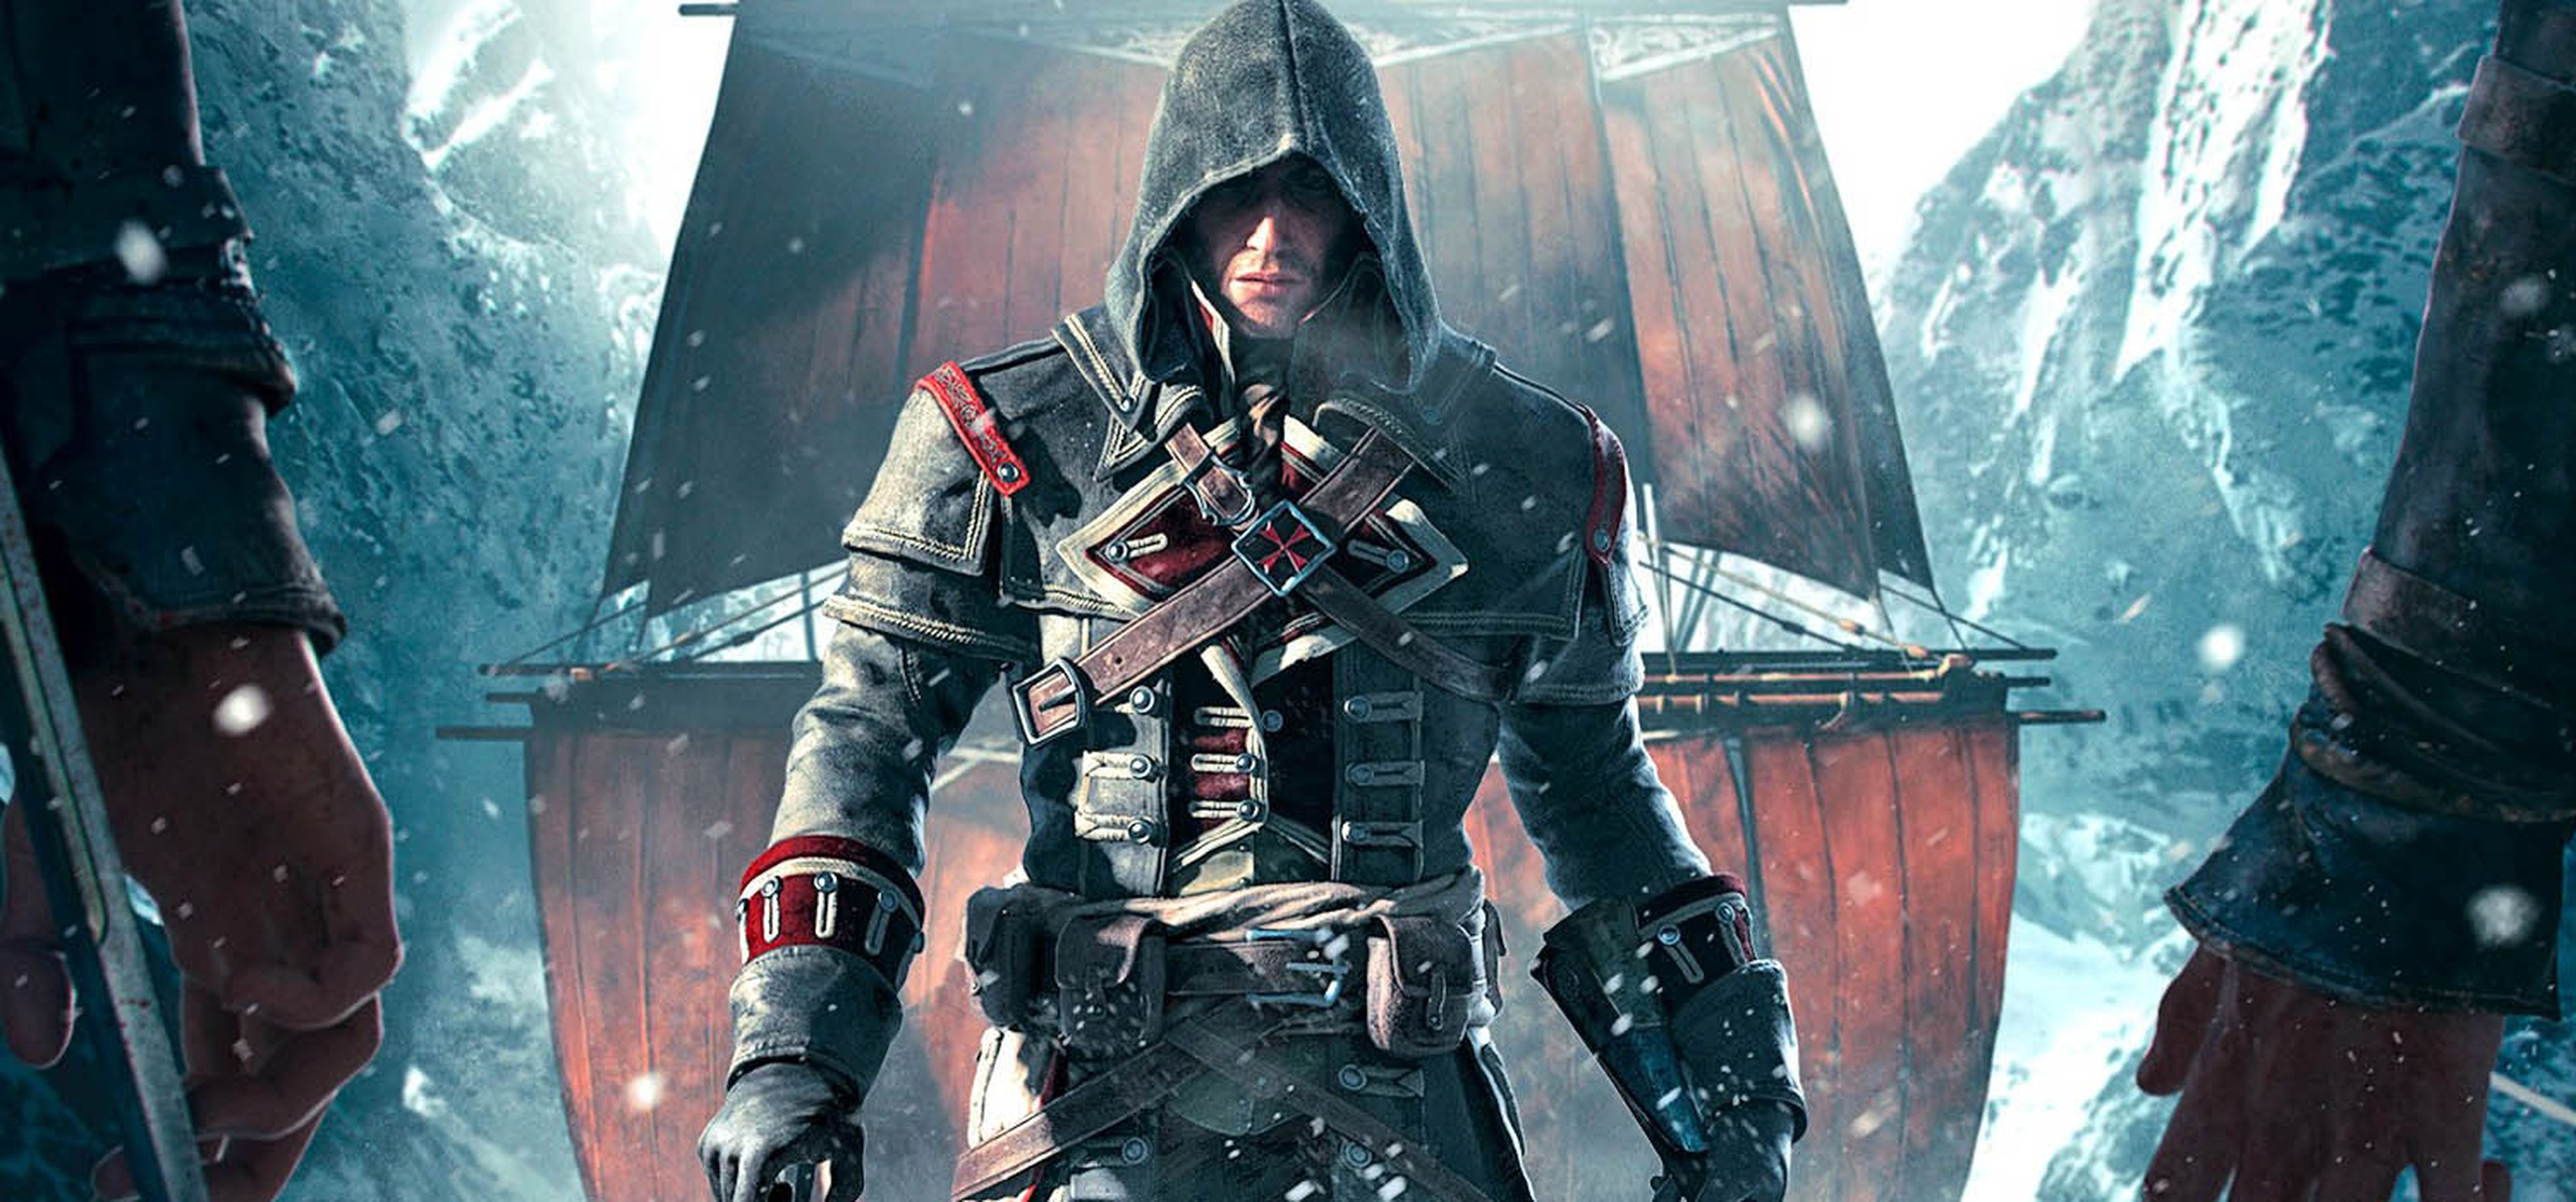 Análise de Assassin's Creed: Rogue